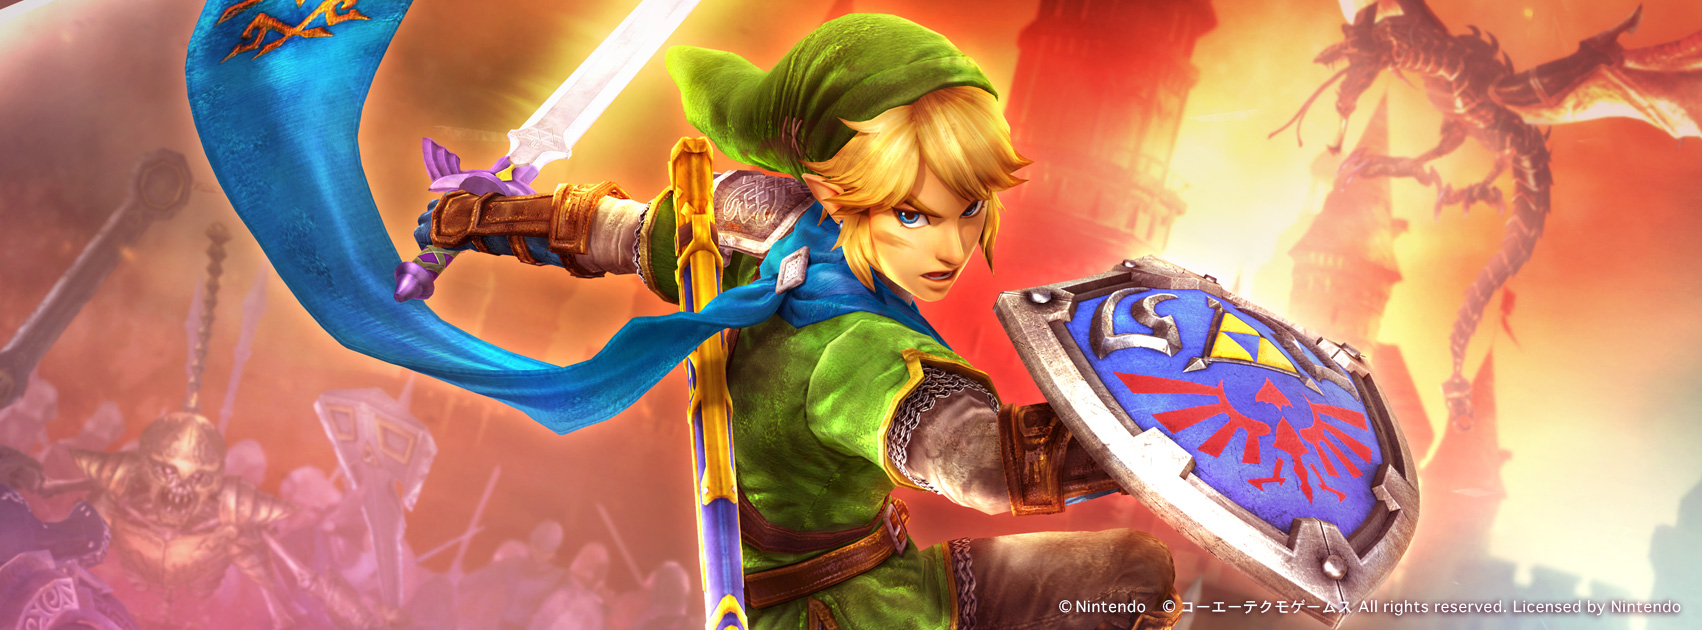 Hyrule Warriors Artwork Tons More Screenshots Revealed Zelda